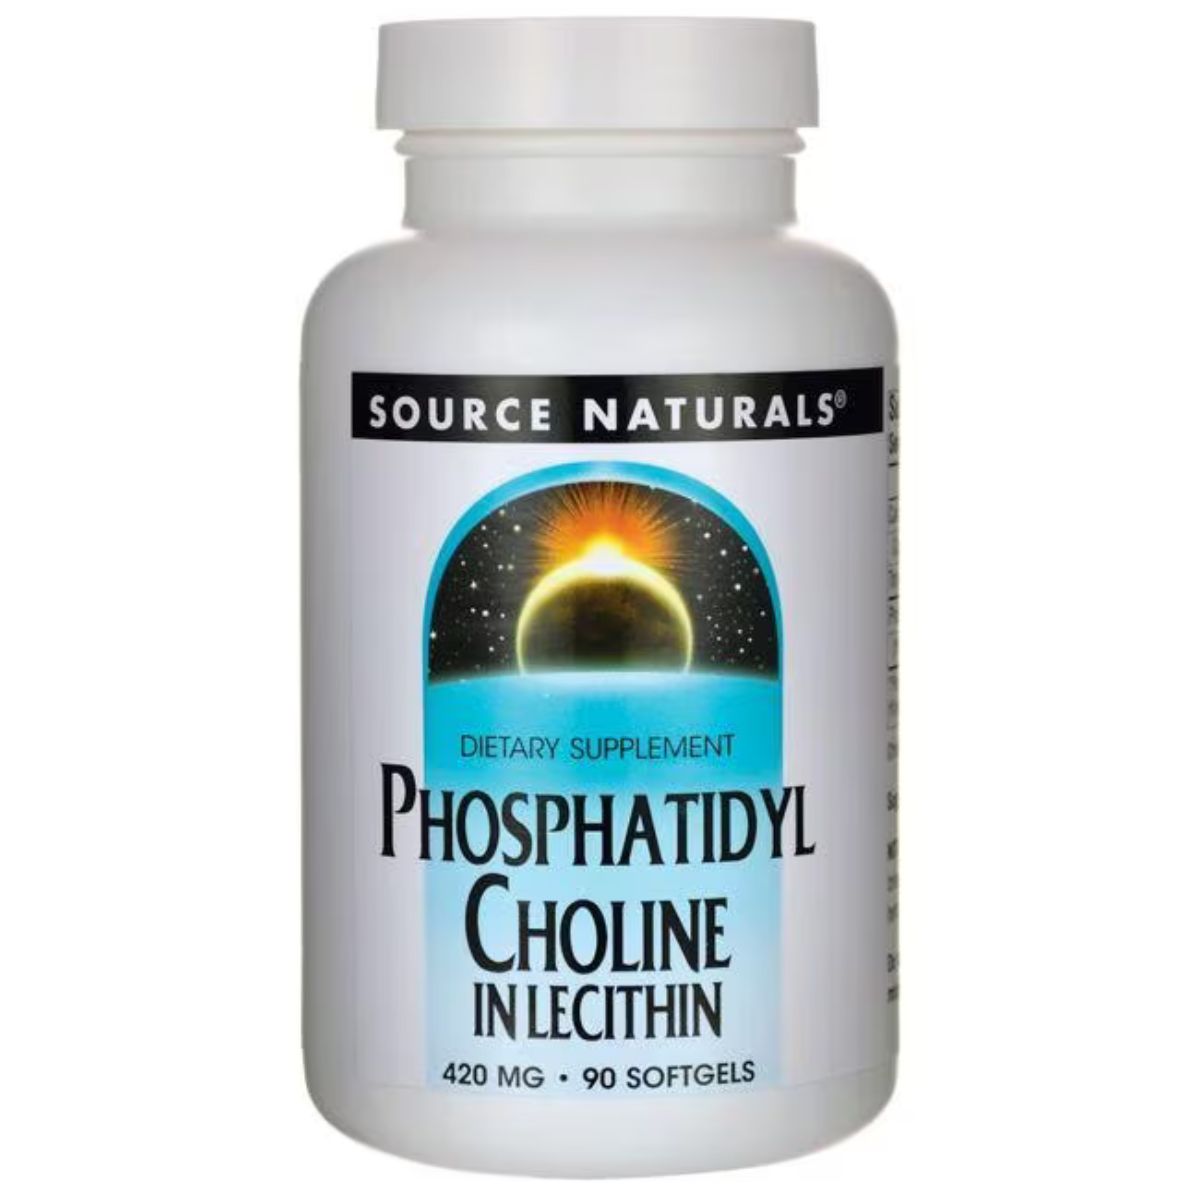 Phosphatidyl Choline in Lecithin